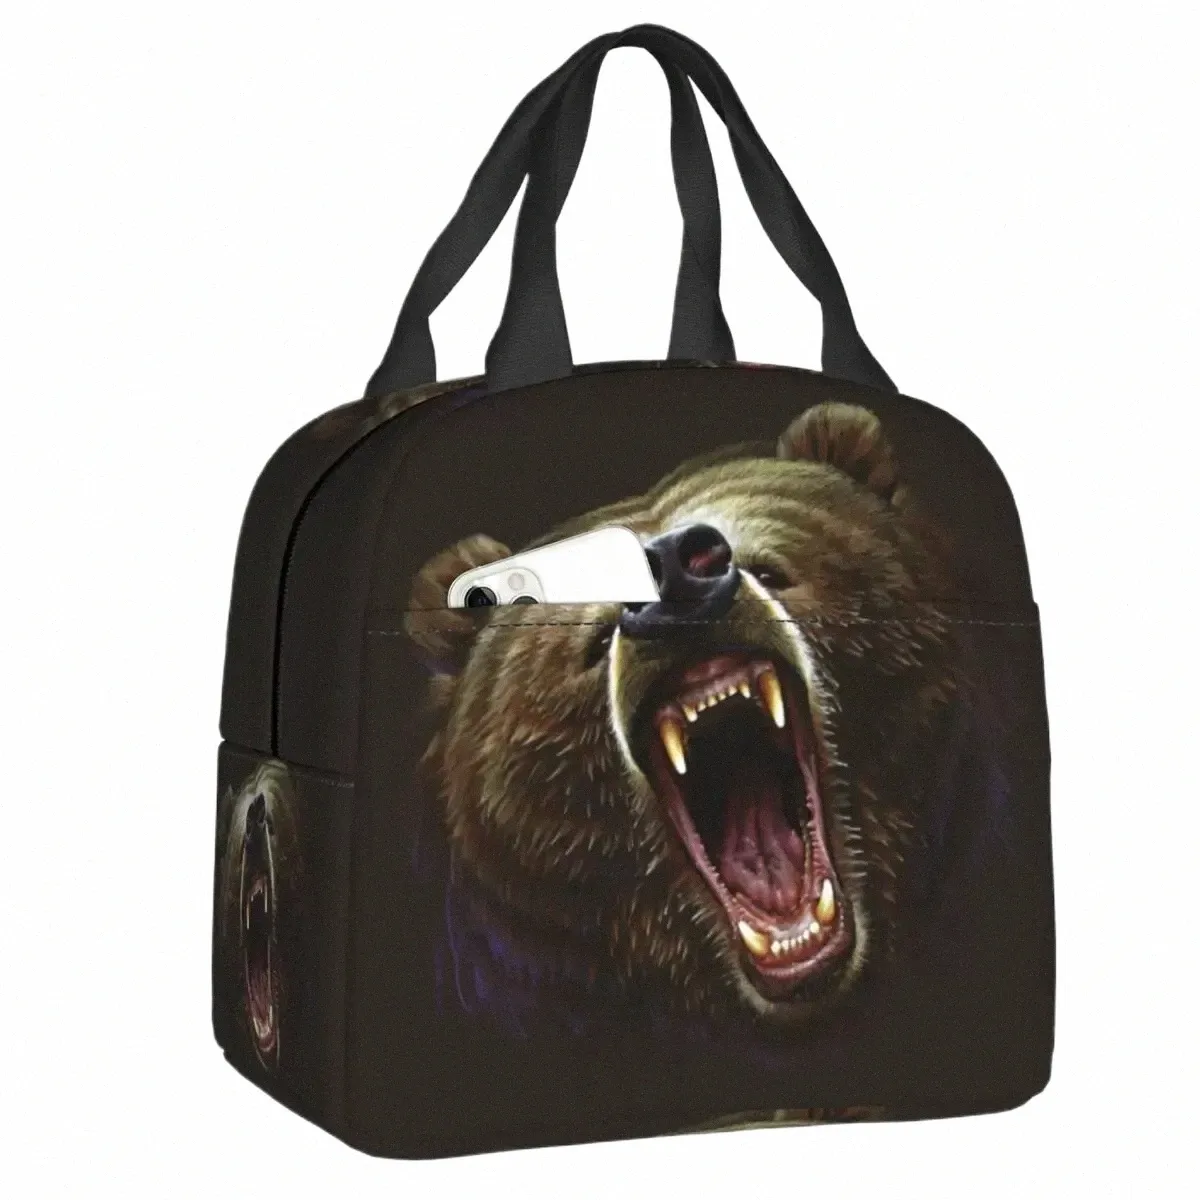 feroz Grizzly Bear Isolado Lancheira para Mulheres Homens À Prova D 'Água Térmica Cooler Lunch Box Office Picnic Travel Food Tote Bags S60k #